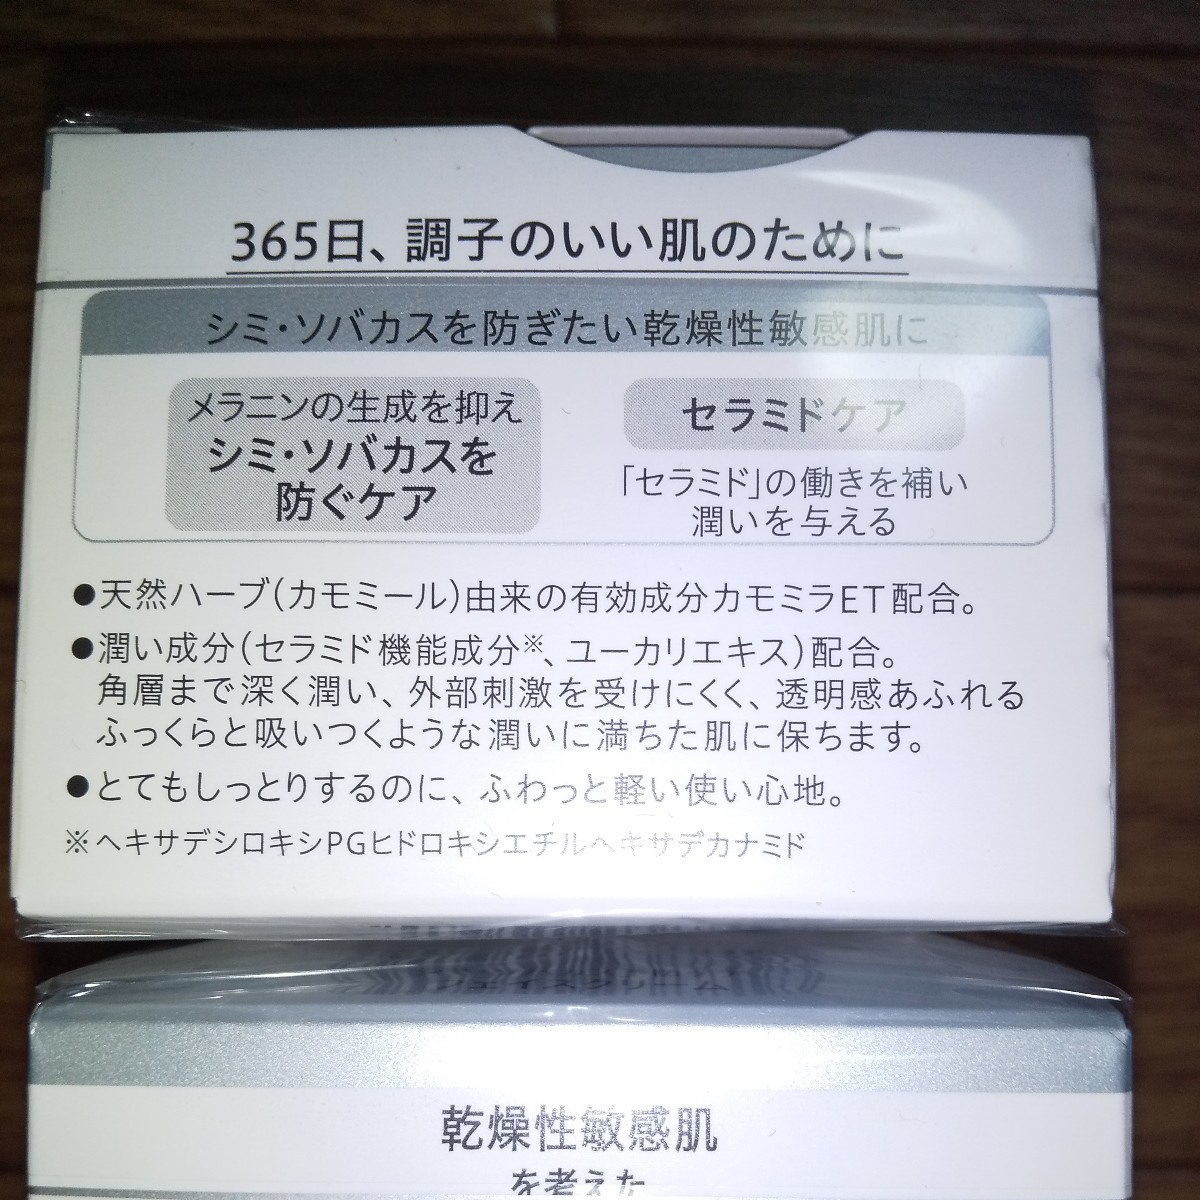 ☆Curel シミソバカス予防ケア フェイスクリーム 40g  2個セット 新品未使用 乾燥性敏感肌に最適です お買い得の画像3